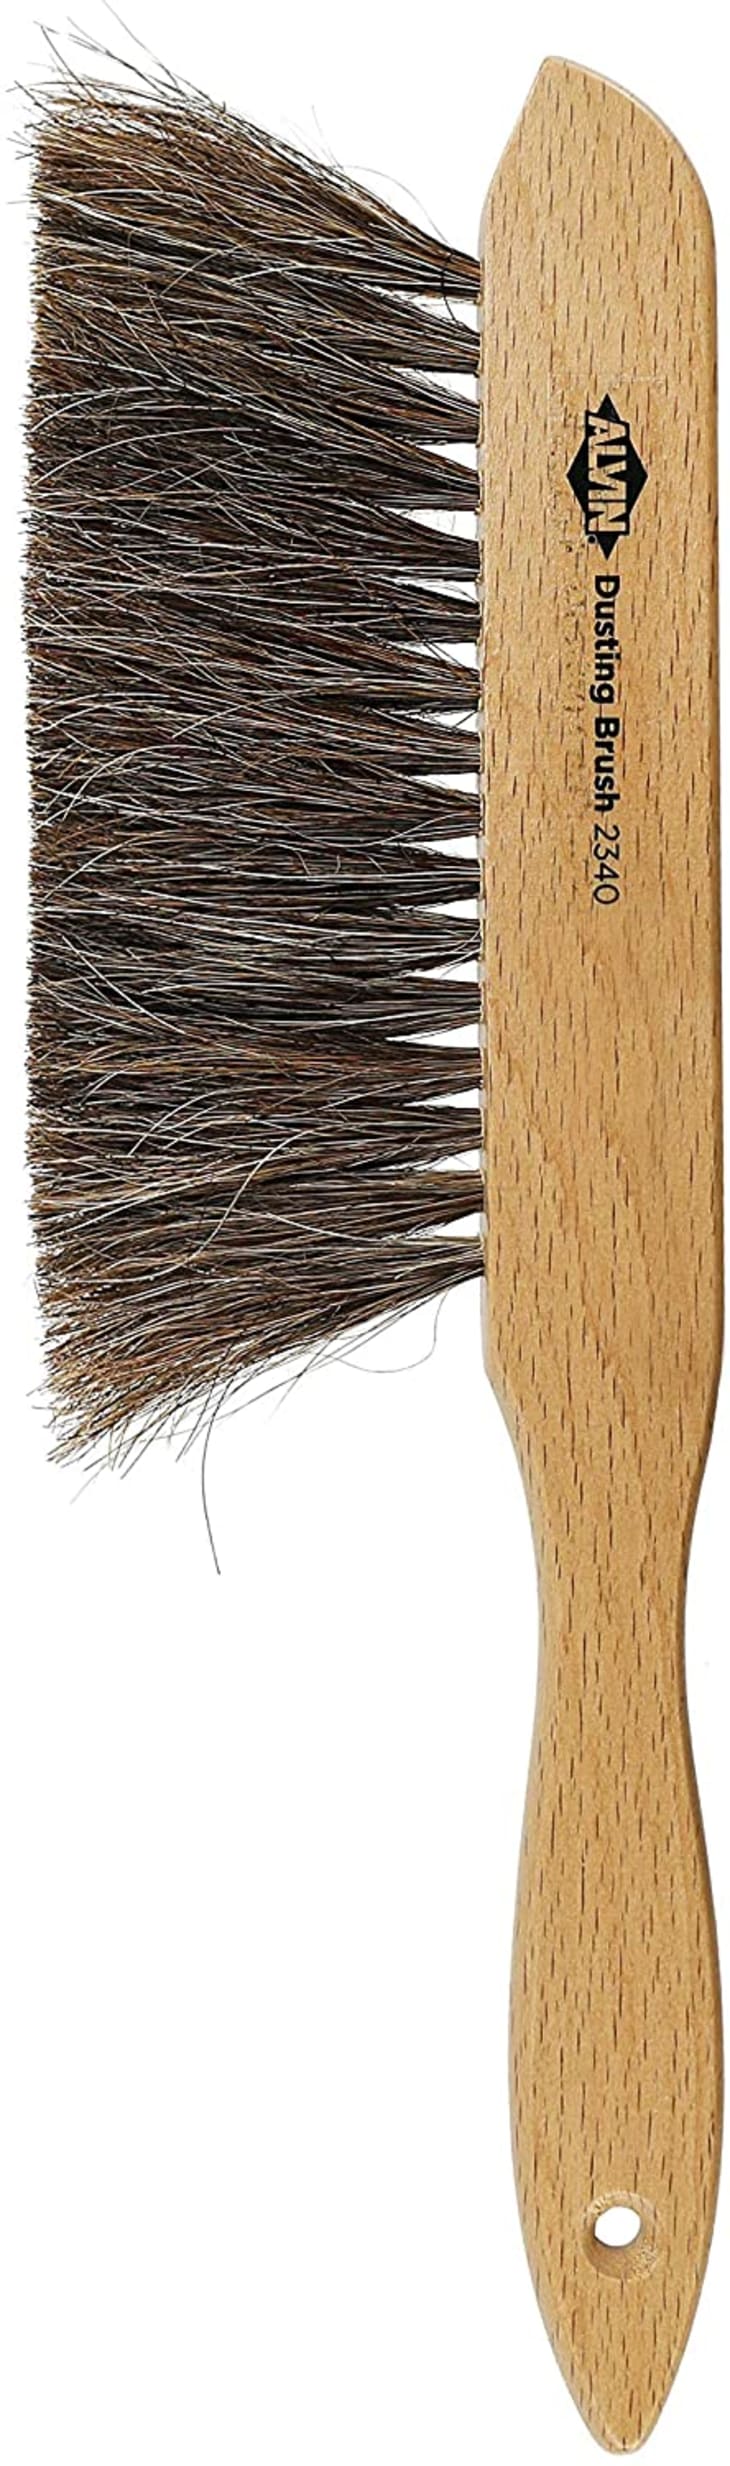 Product Image: Alvin Draftsman’s Mini-Duster Dusting Brush